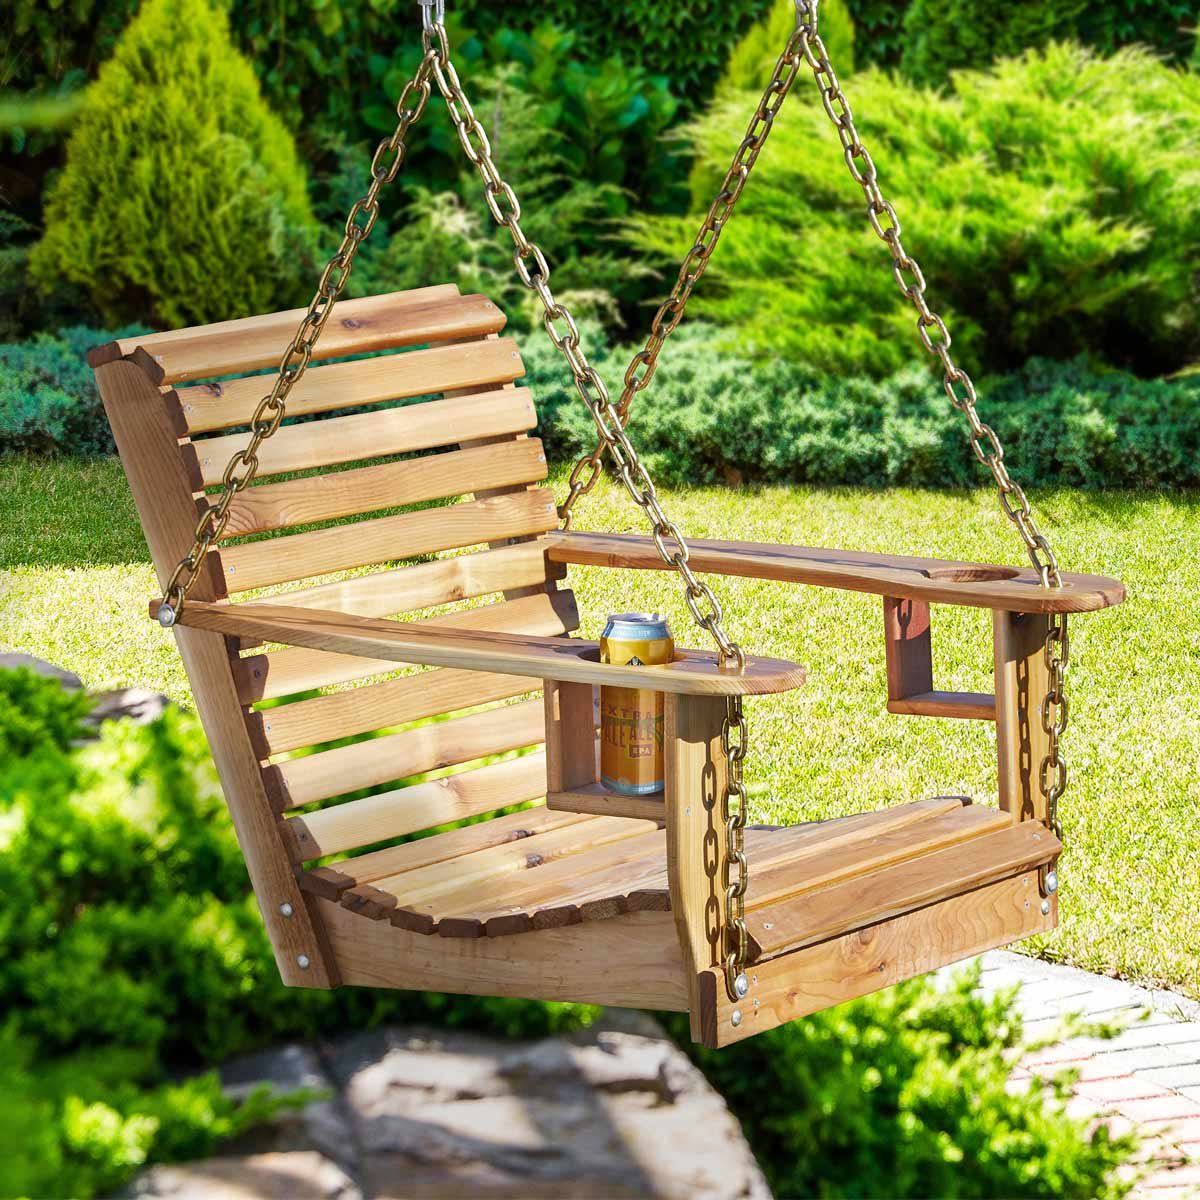 How to Build a Backyard Swing (DIY) | Family Handyman